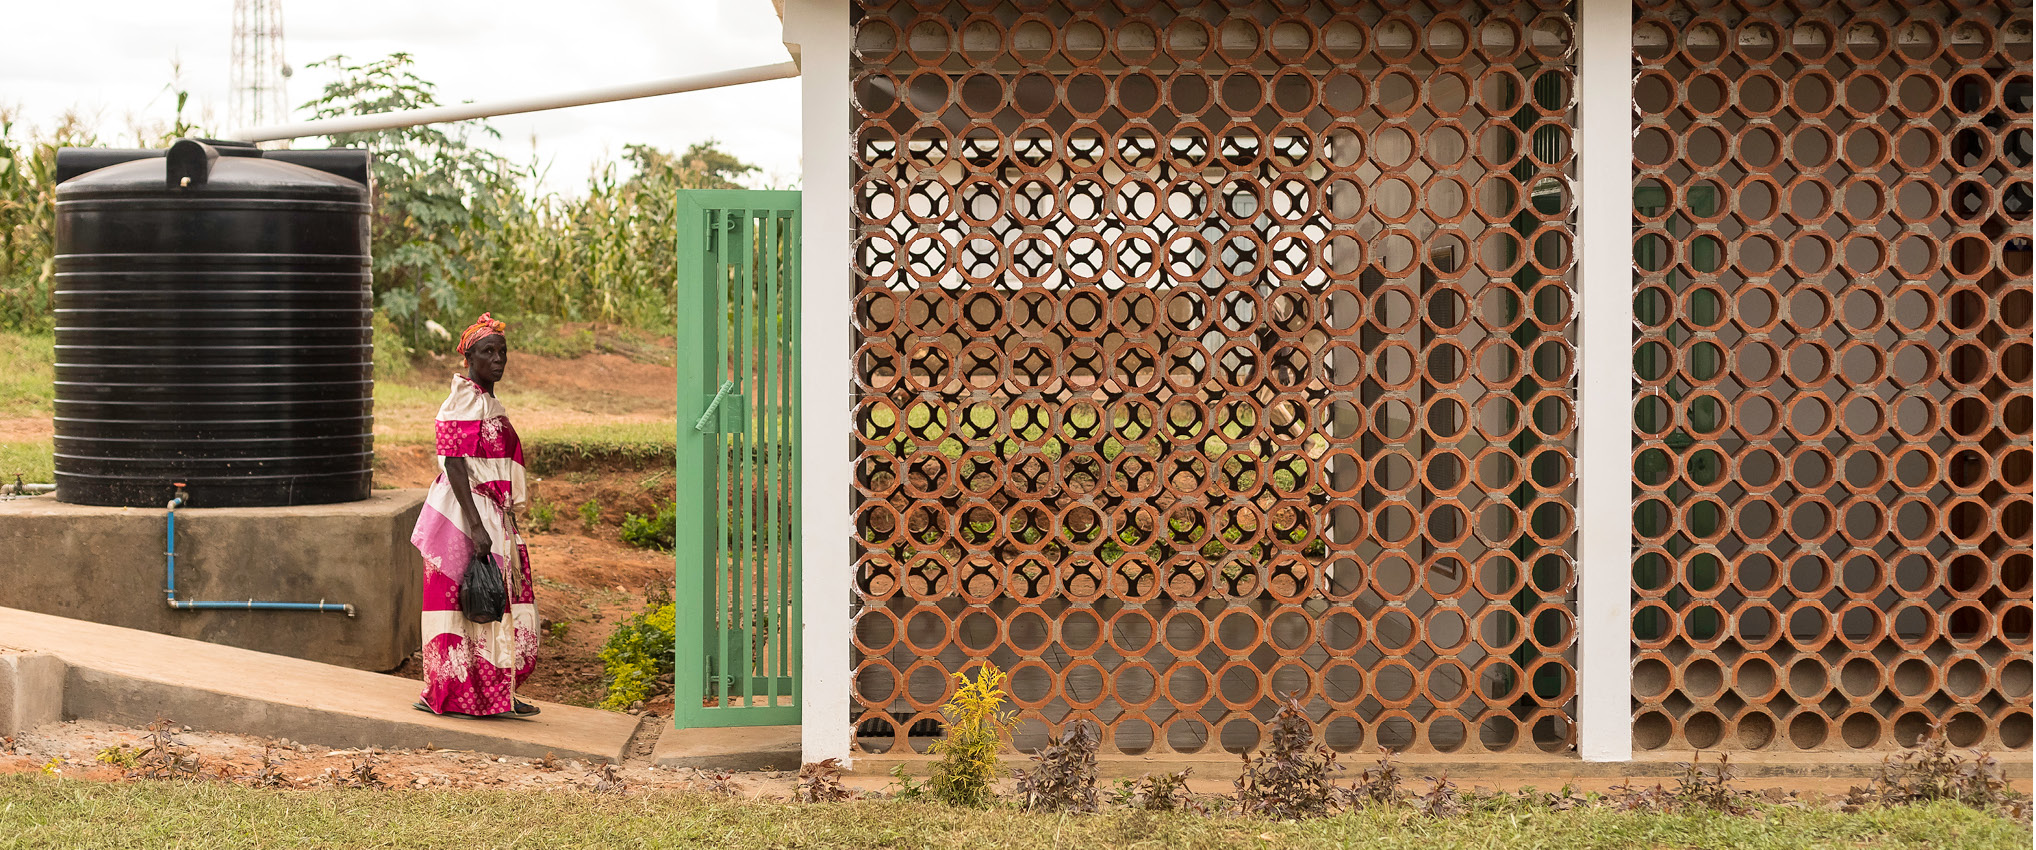 HKS-Designed Maternity Facility in Rural Uganda Is Entirely Self-Sustaining